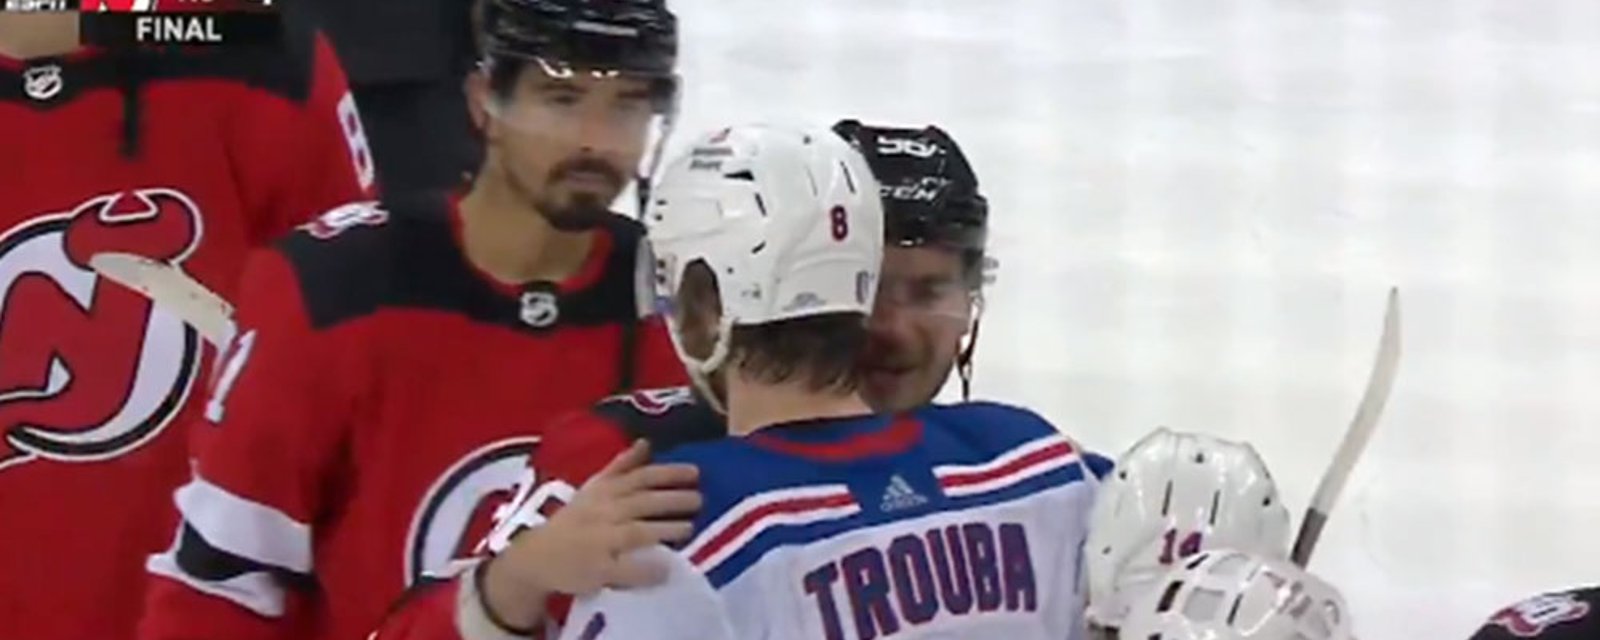 Trouba and Meier embrace in handshake line after HUGE open ice hit